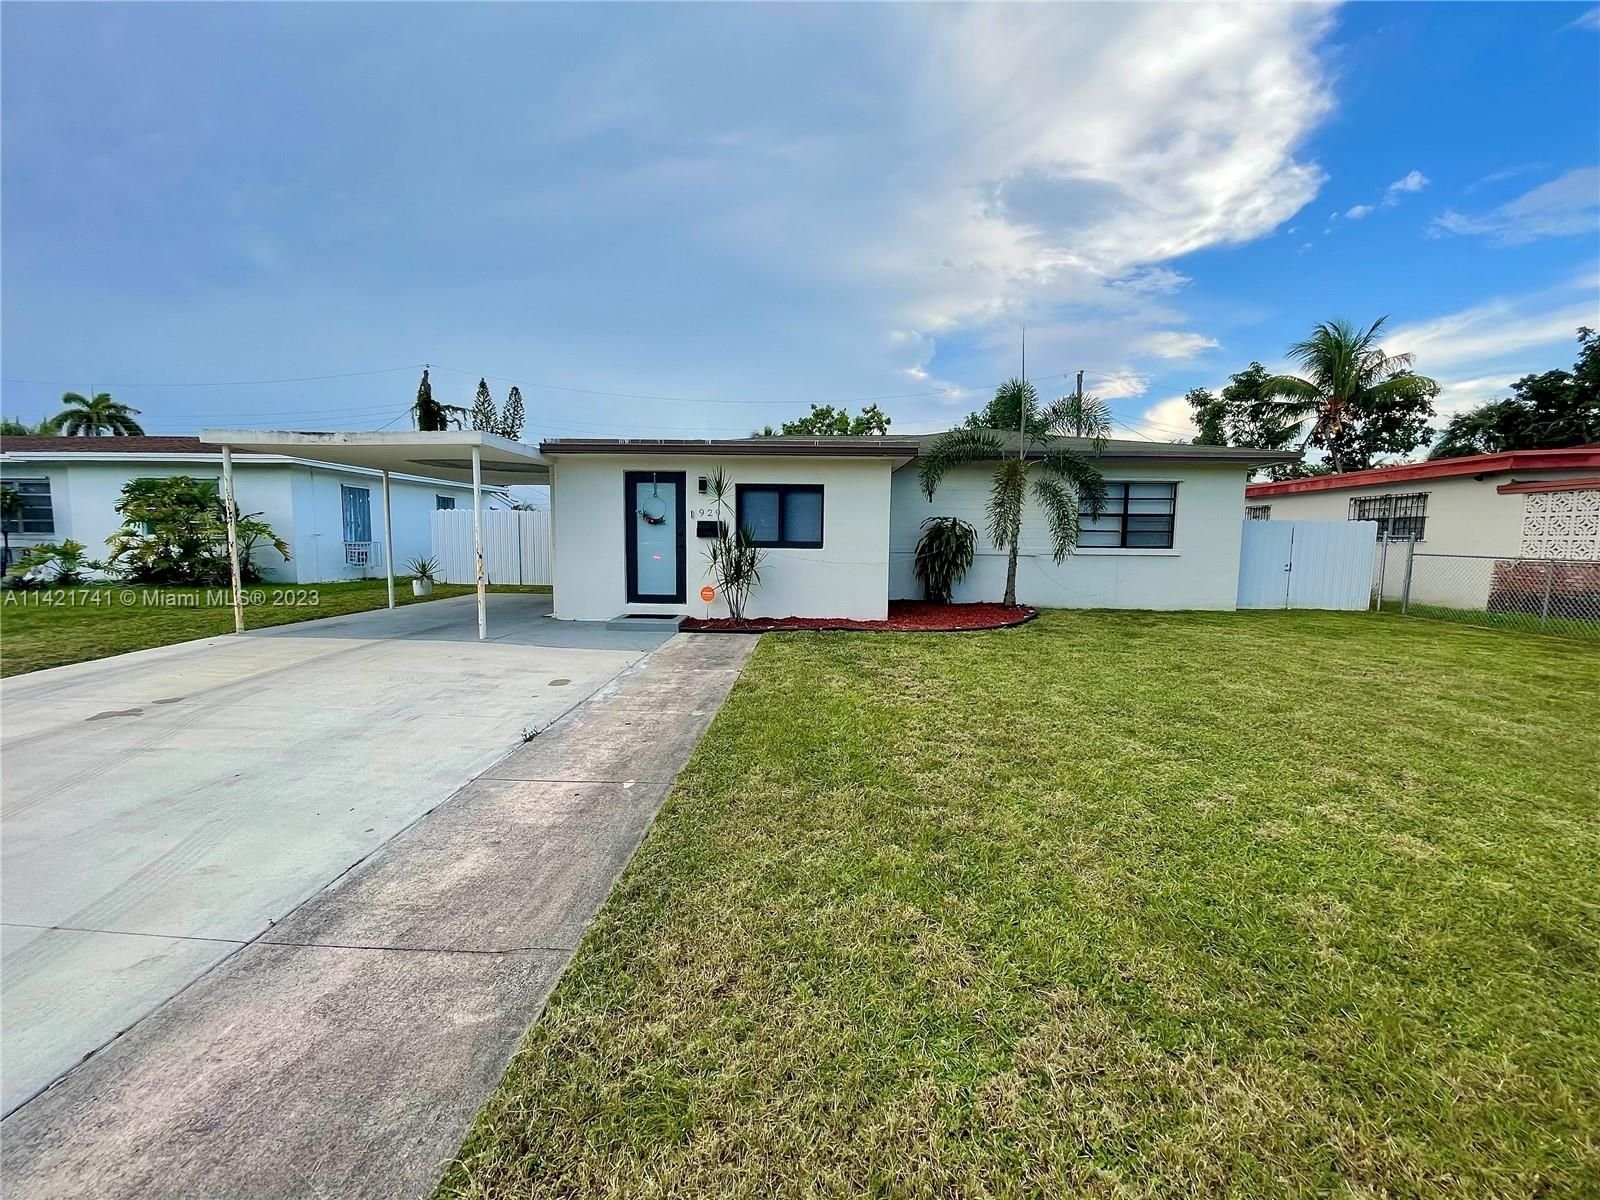 Real estate property located at 929 163rd St, Miami-Dade County, North Miami Beach, FL